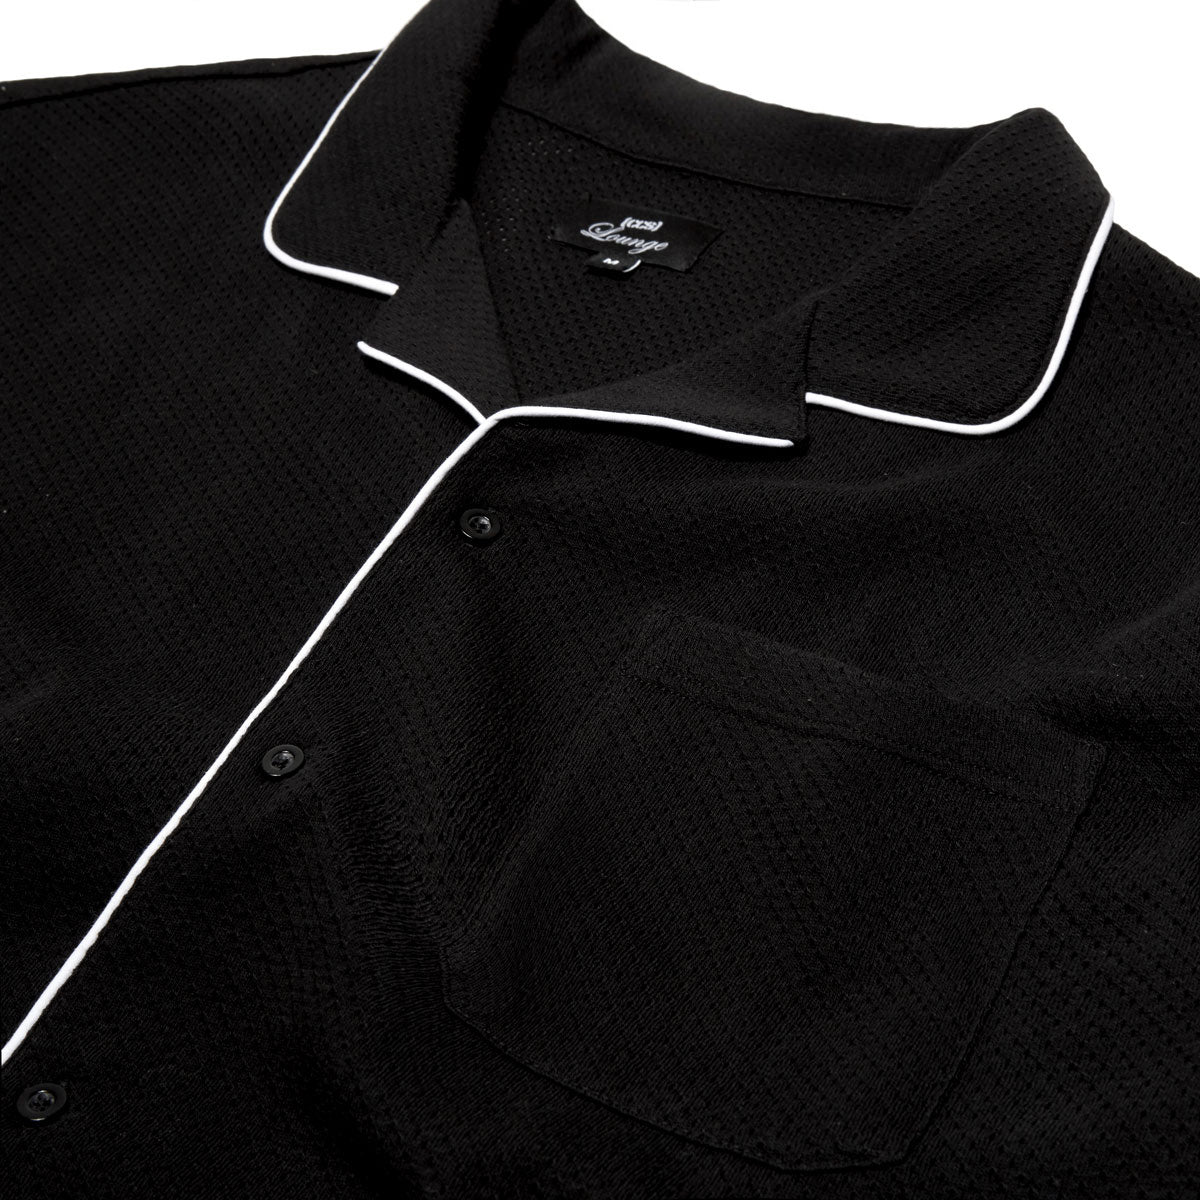 CCS Lounge Mesh Shirt - Black image 3